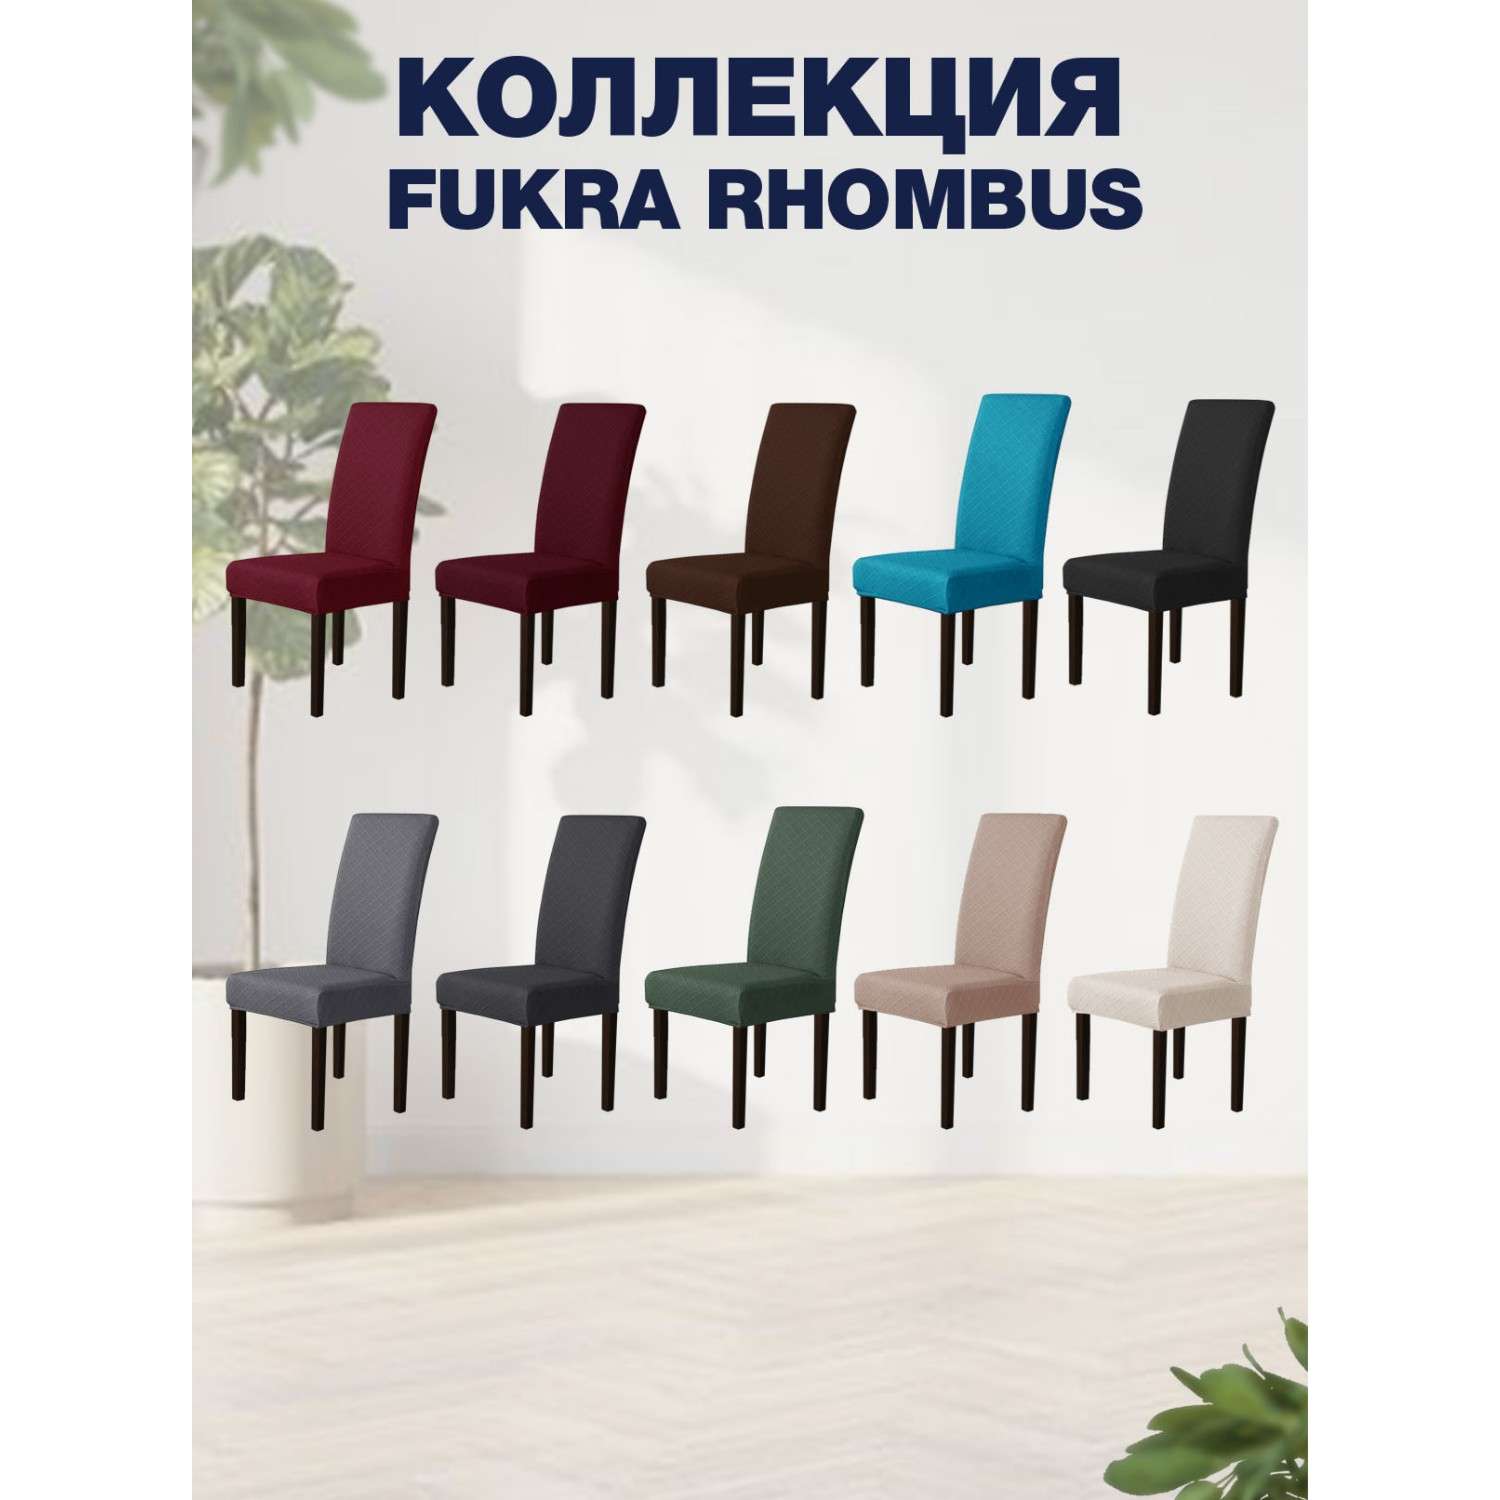 Чехол на стул LuxAlto Коллекция Fukra rhombus Светло-коричневый - фото 3